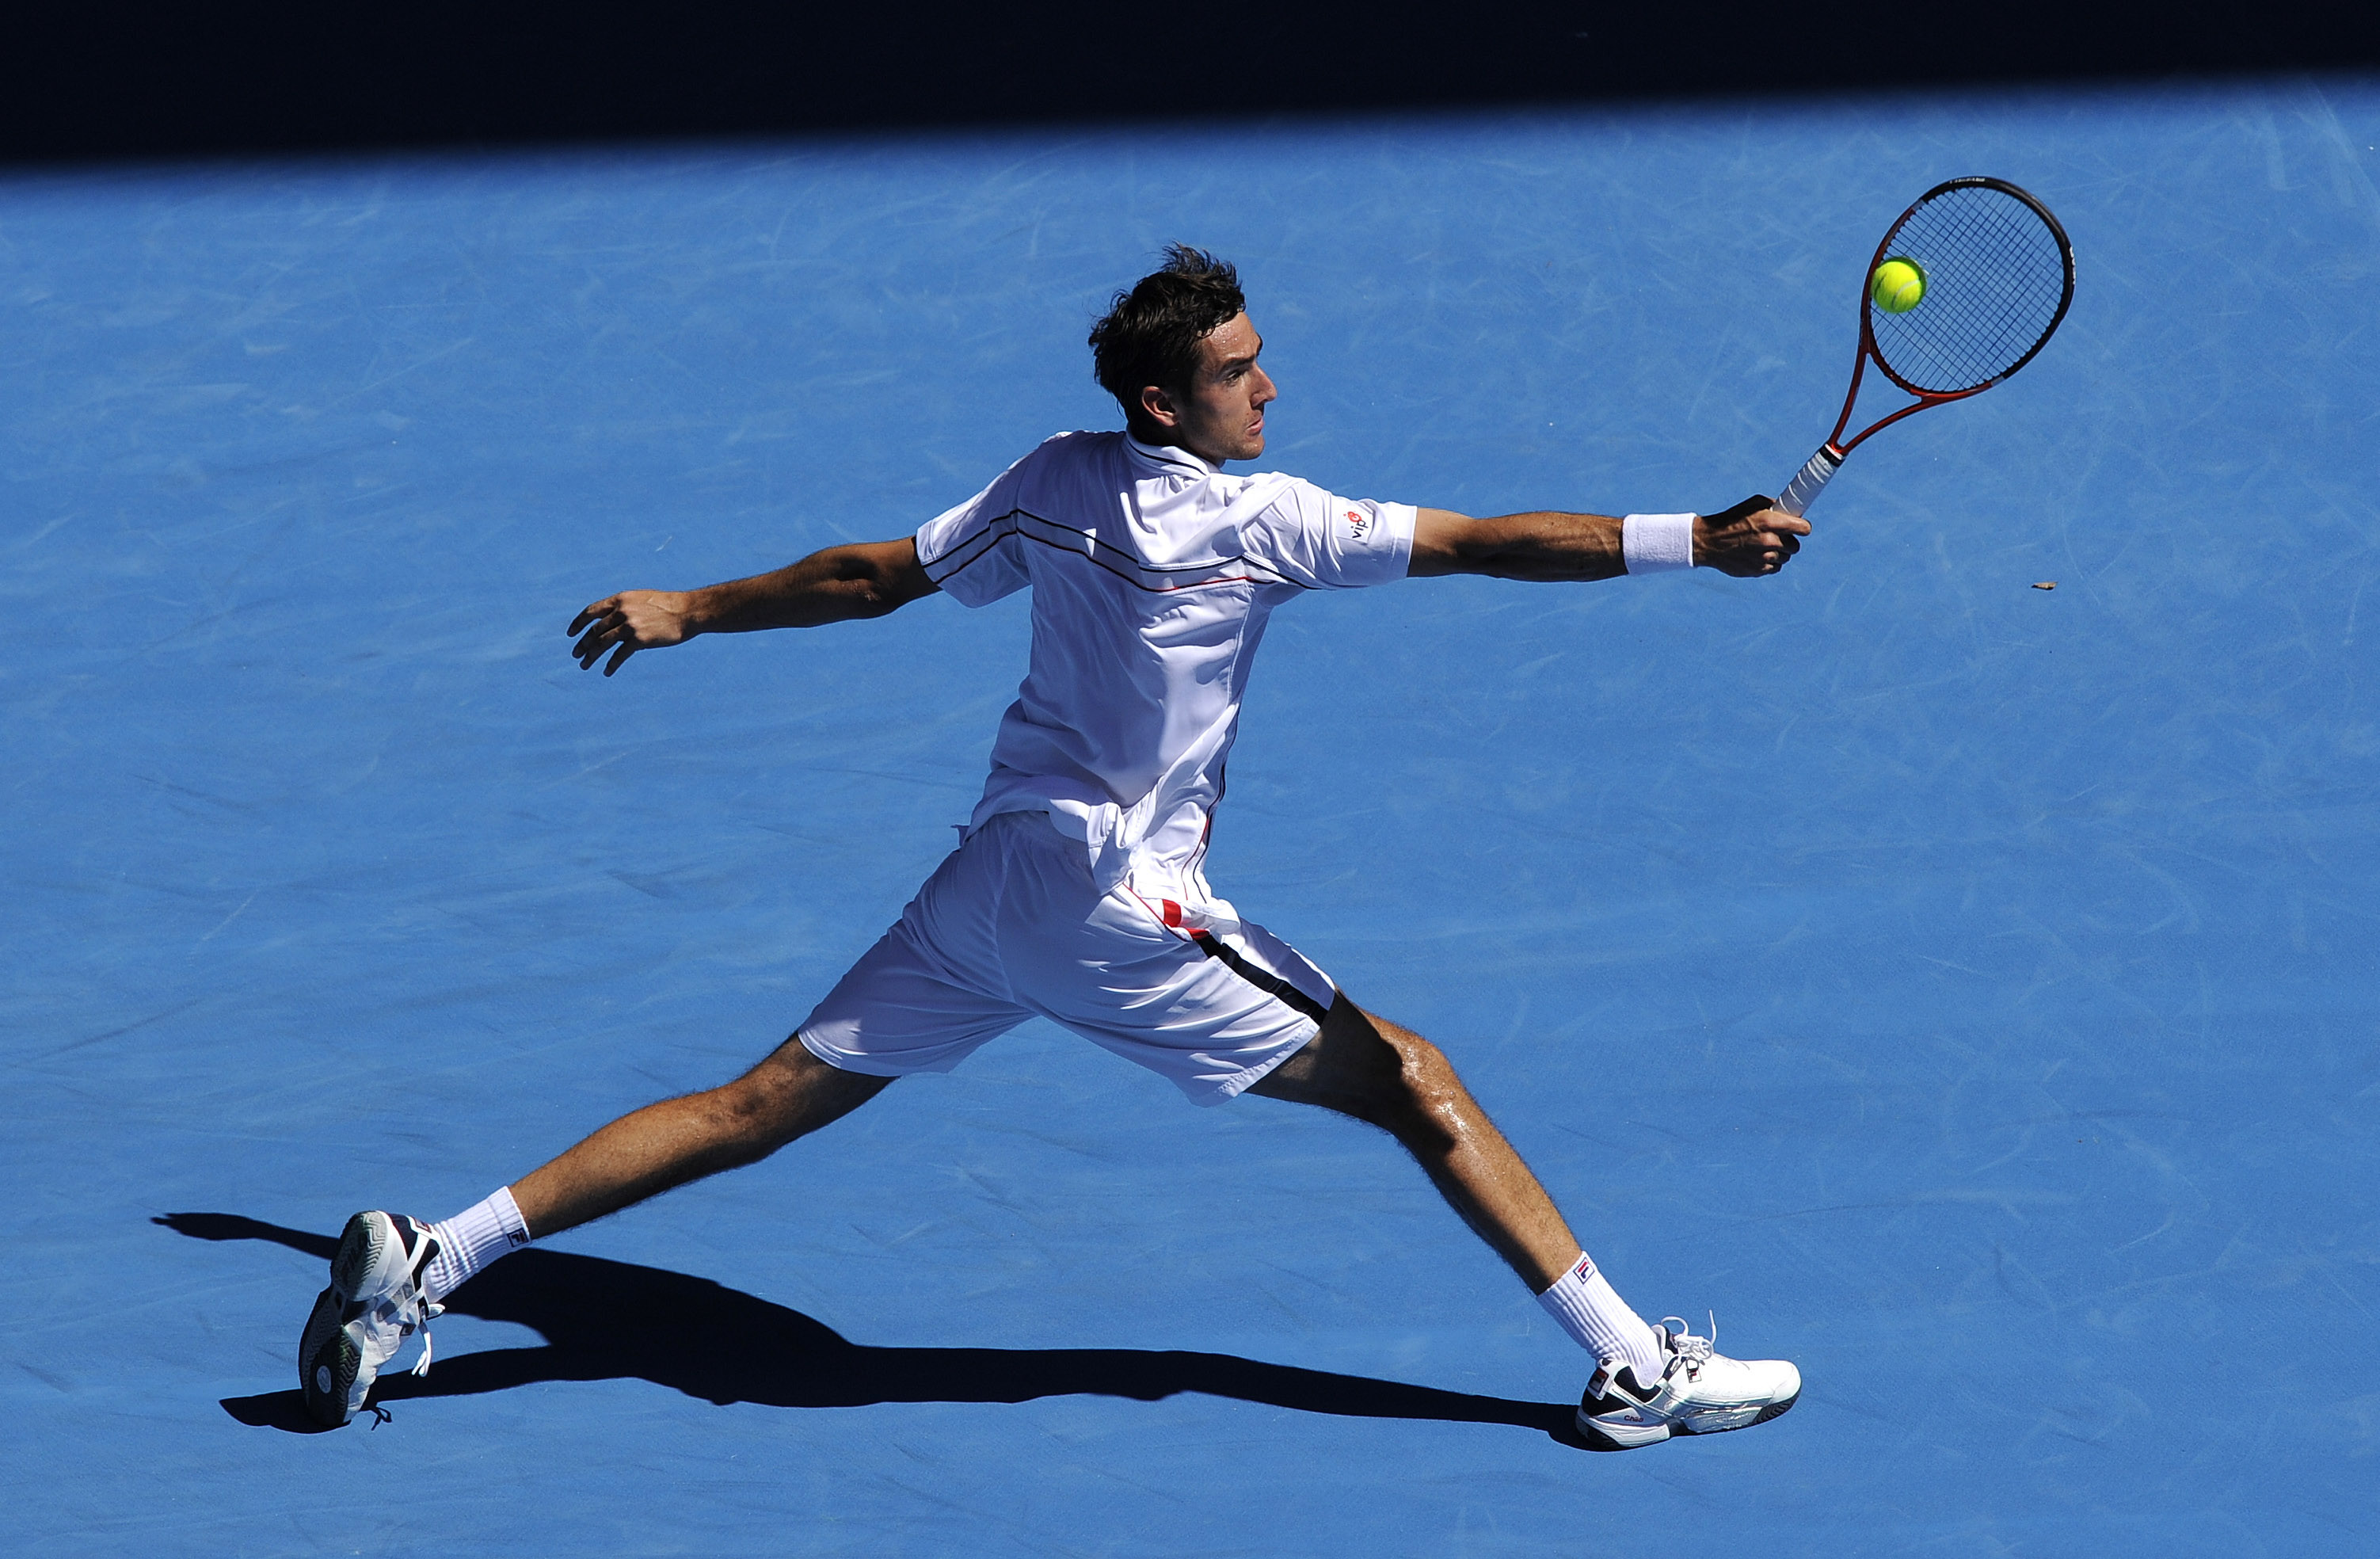 Tennis, Marin Cilic, Andy Murray, Roger Federer, Australian Open, Kvartsfinal, Andy Roddick, Juan Martin del Potro